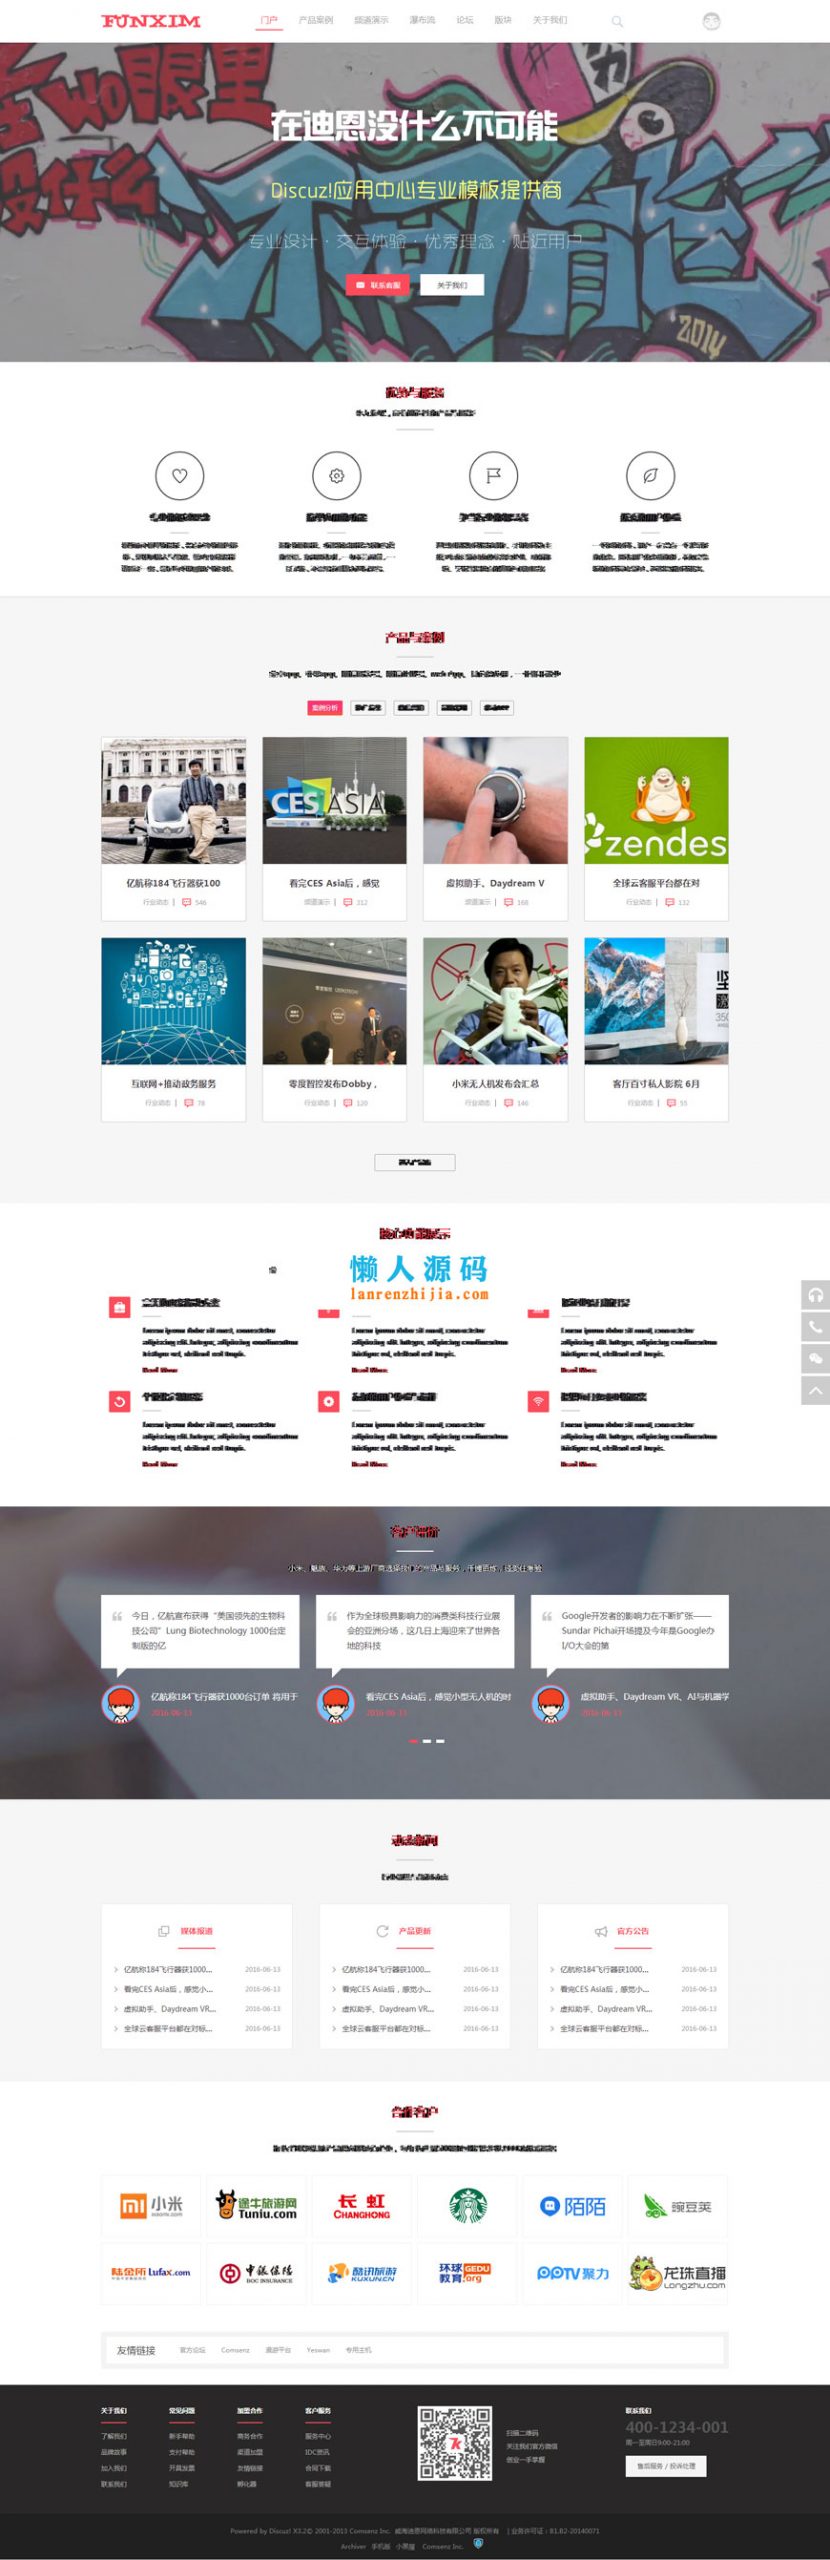 Discuz X3.2模板 仿迪恩 产品营销案例展示企业网站主题 商业版 GBK